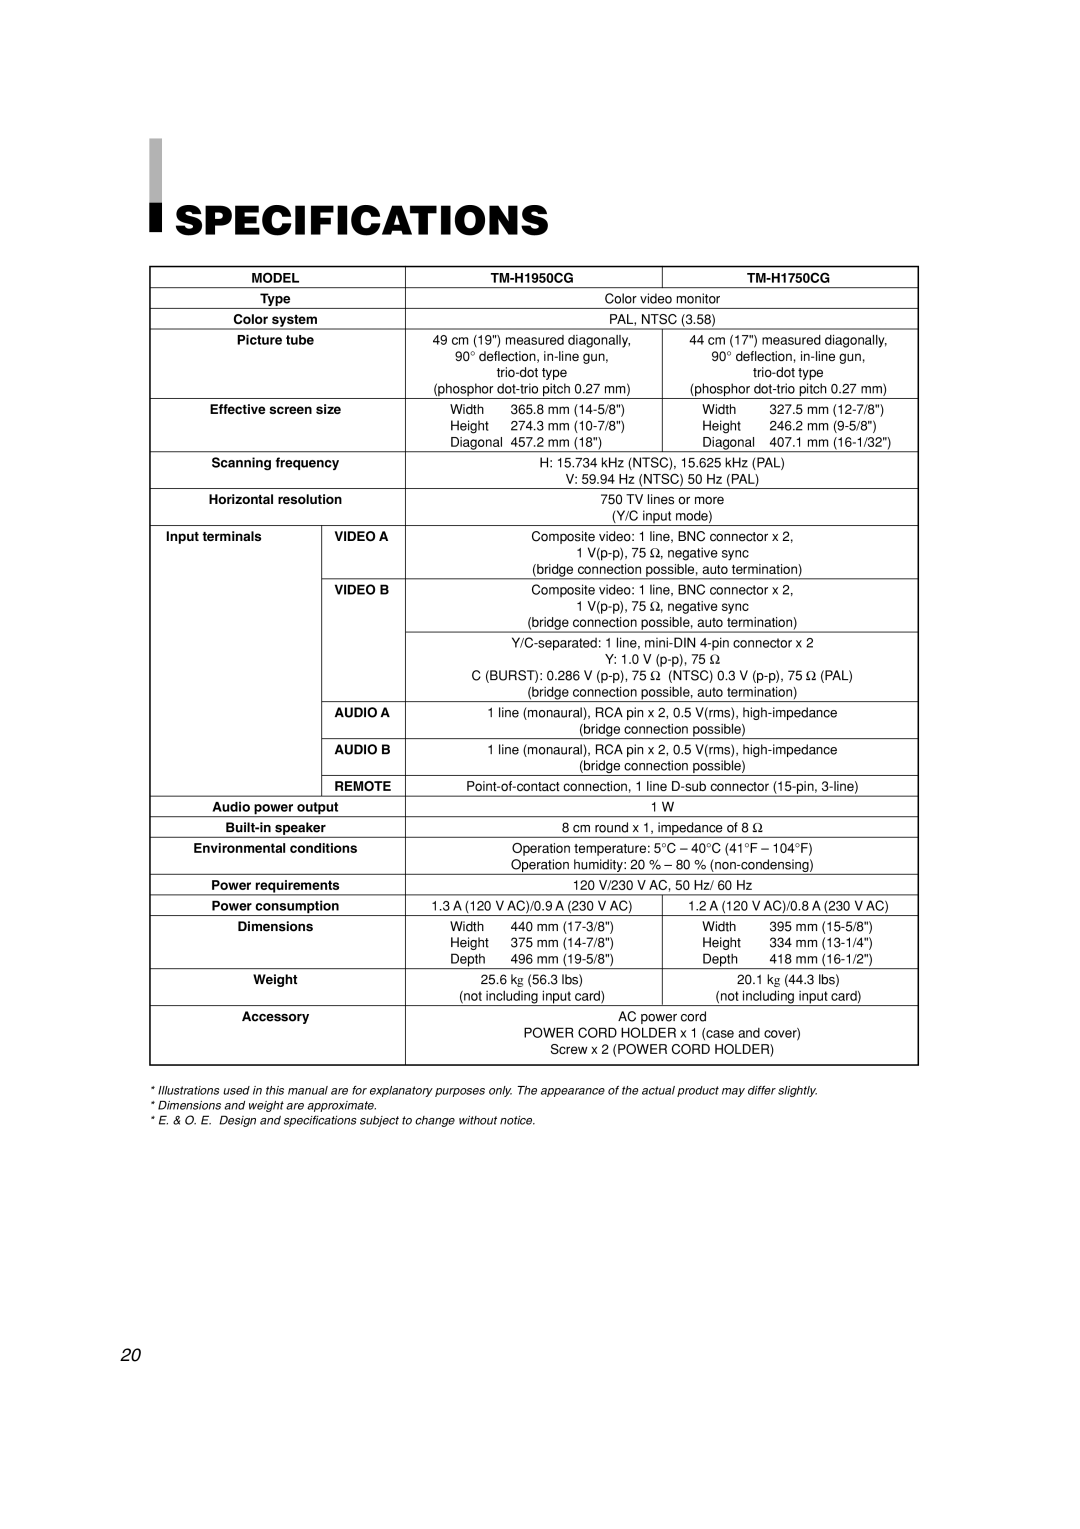 JVC TM-H1950CG manual Specifications 